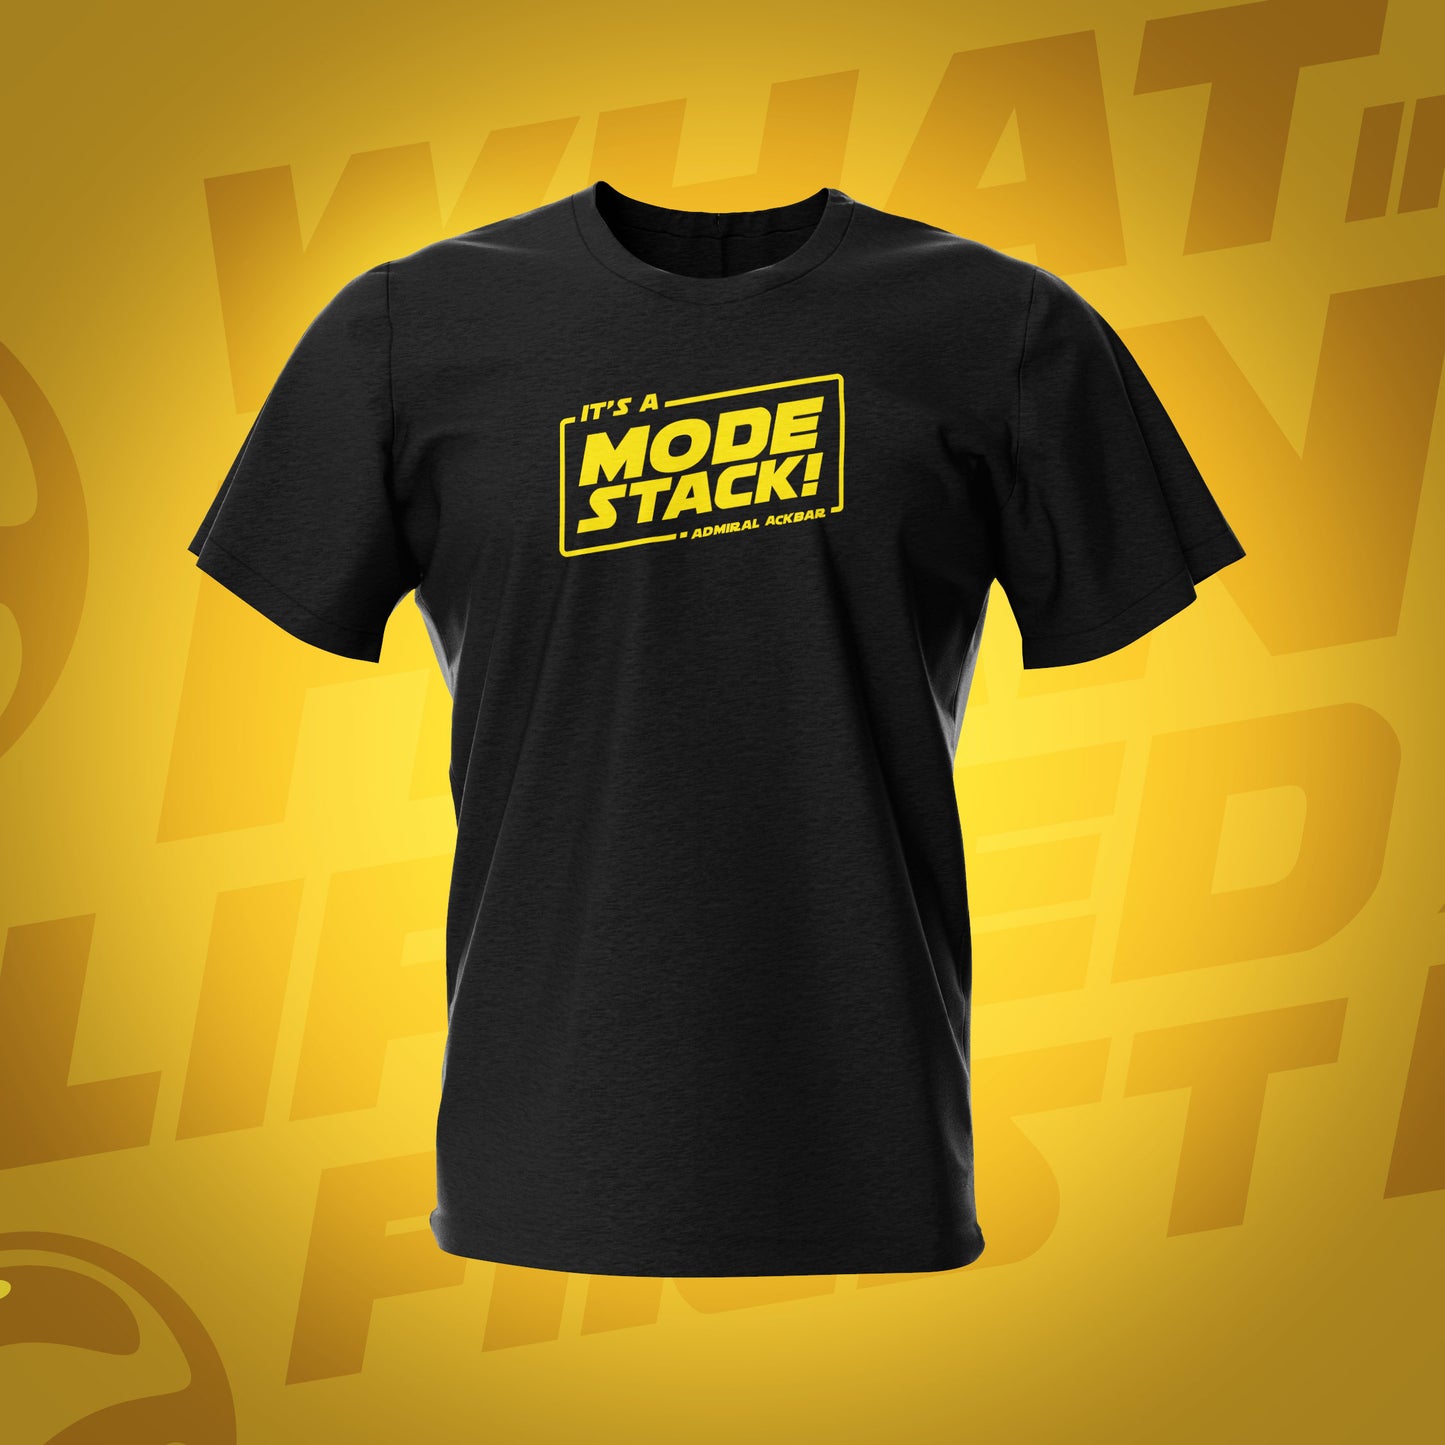 Star Wars Parody Shirt Collection